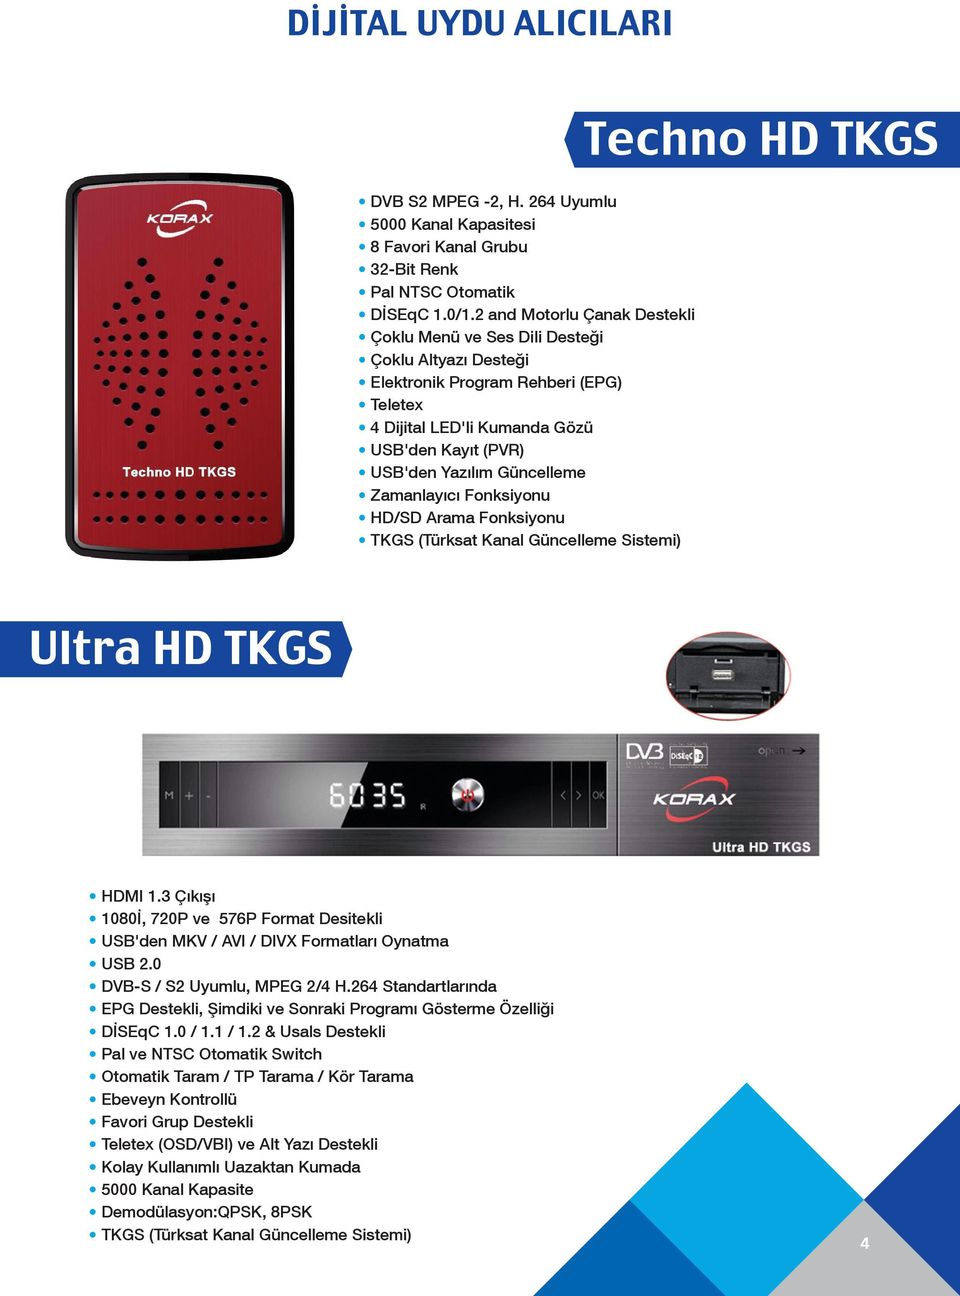 Zamanlayıcı Fonksiyonu HD/SD Arama Fonksiyonu TKGS (Türksat Kanal Güncelleme Sistemi) Techno HD TKGS Ultra HD TKGS HDMI 1.